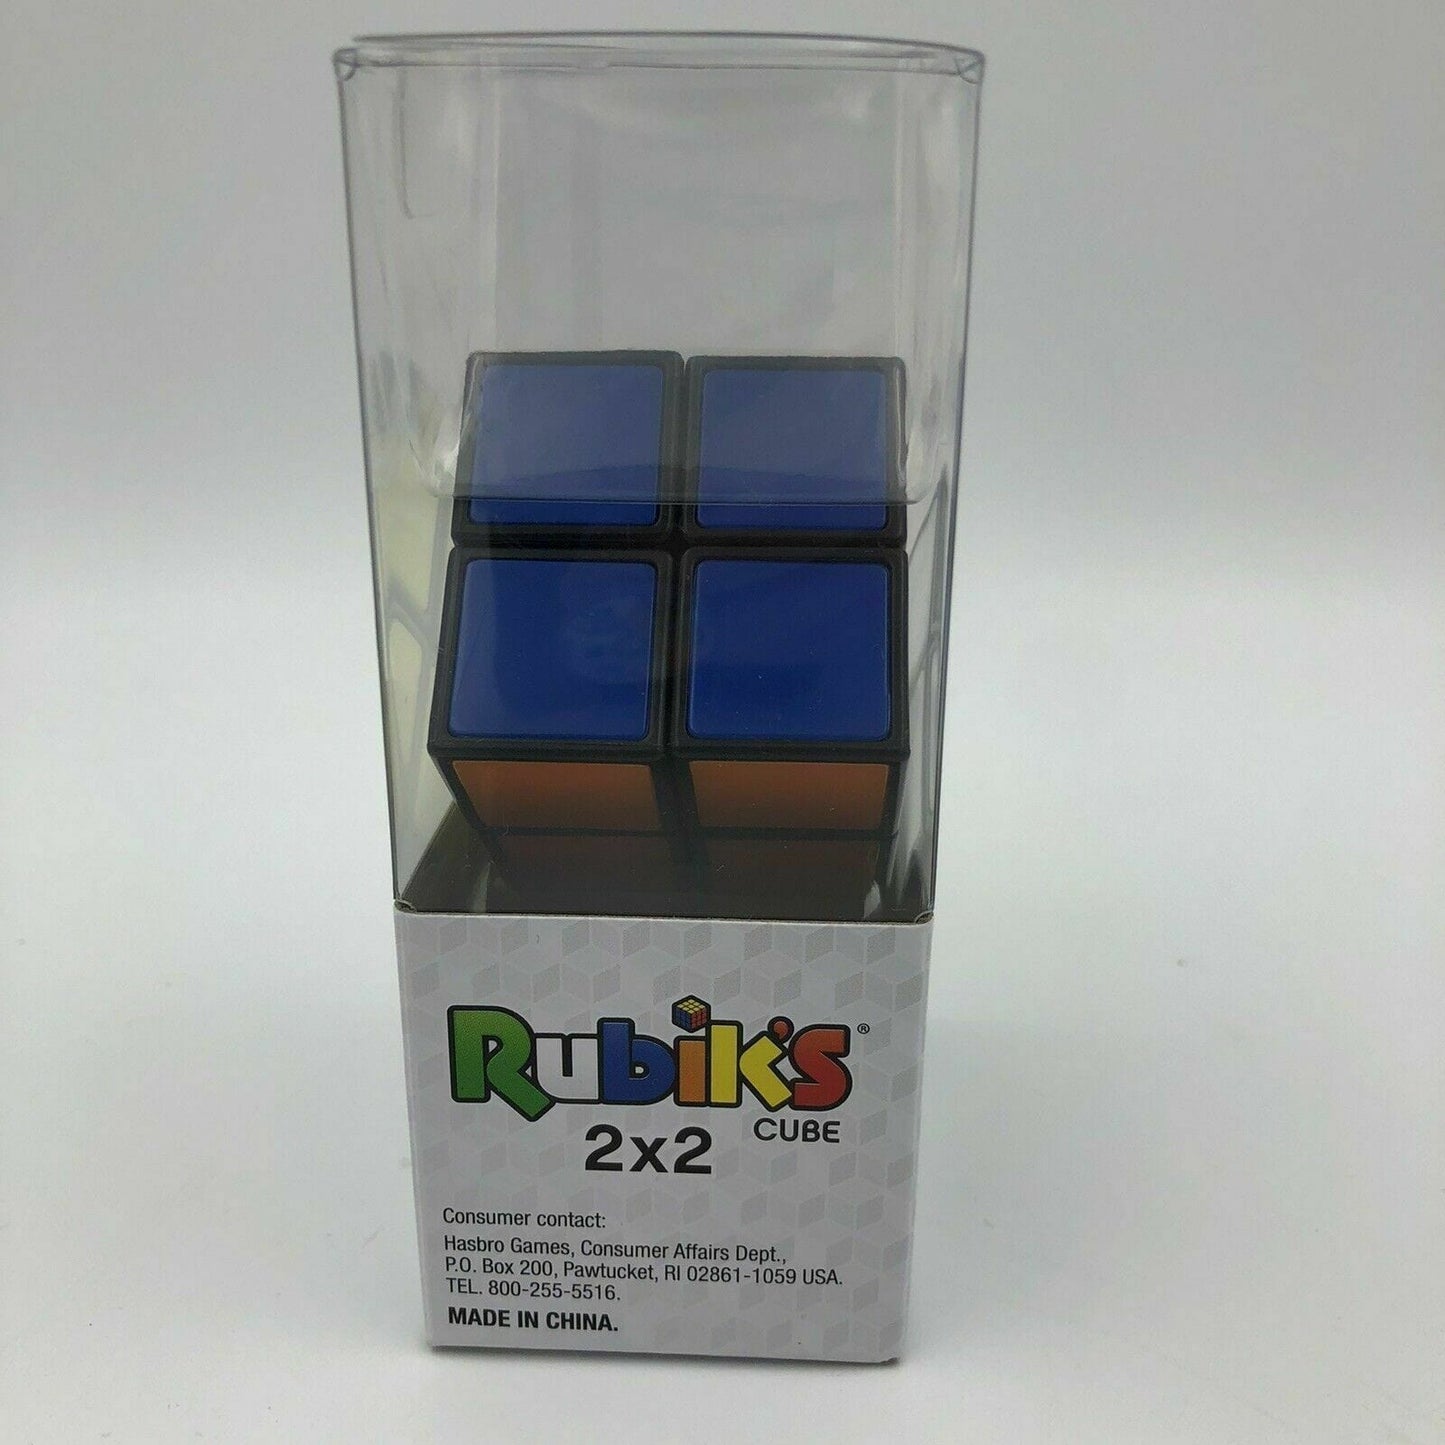 NEW Hasbro Game 2X2 Rubik's Cube C1556 Multicolor Twist